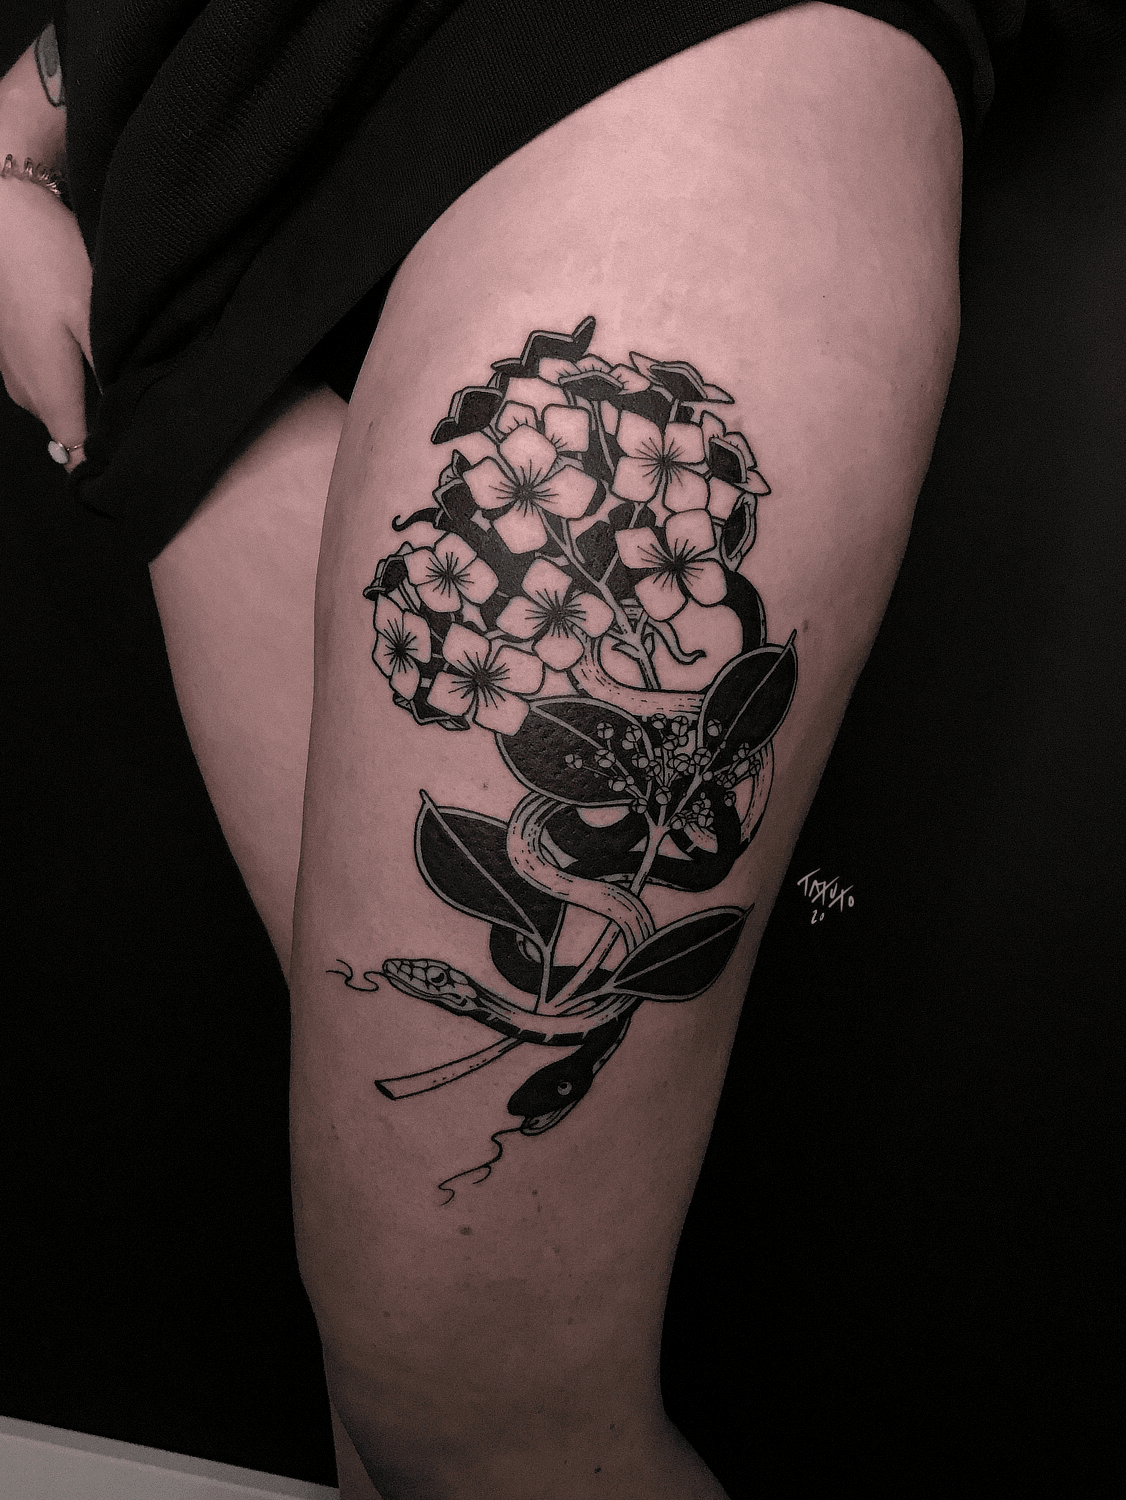 Hydrangea flower tattooed on the tricep